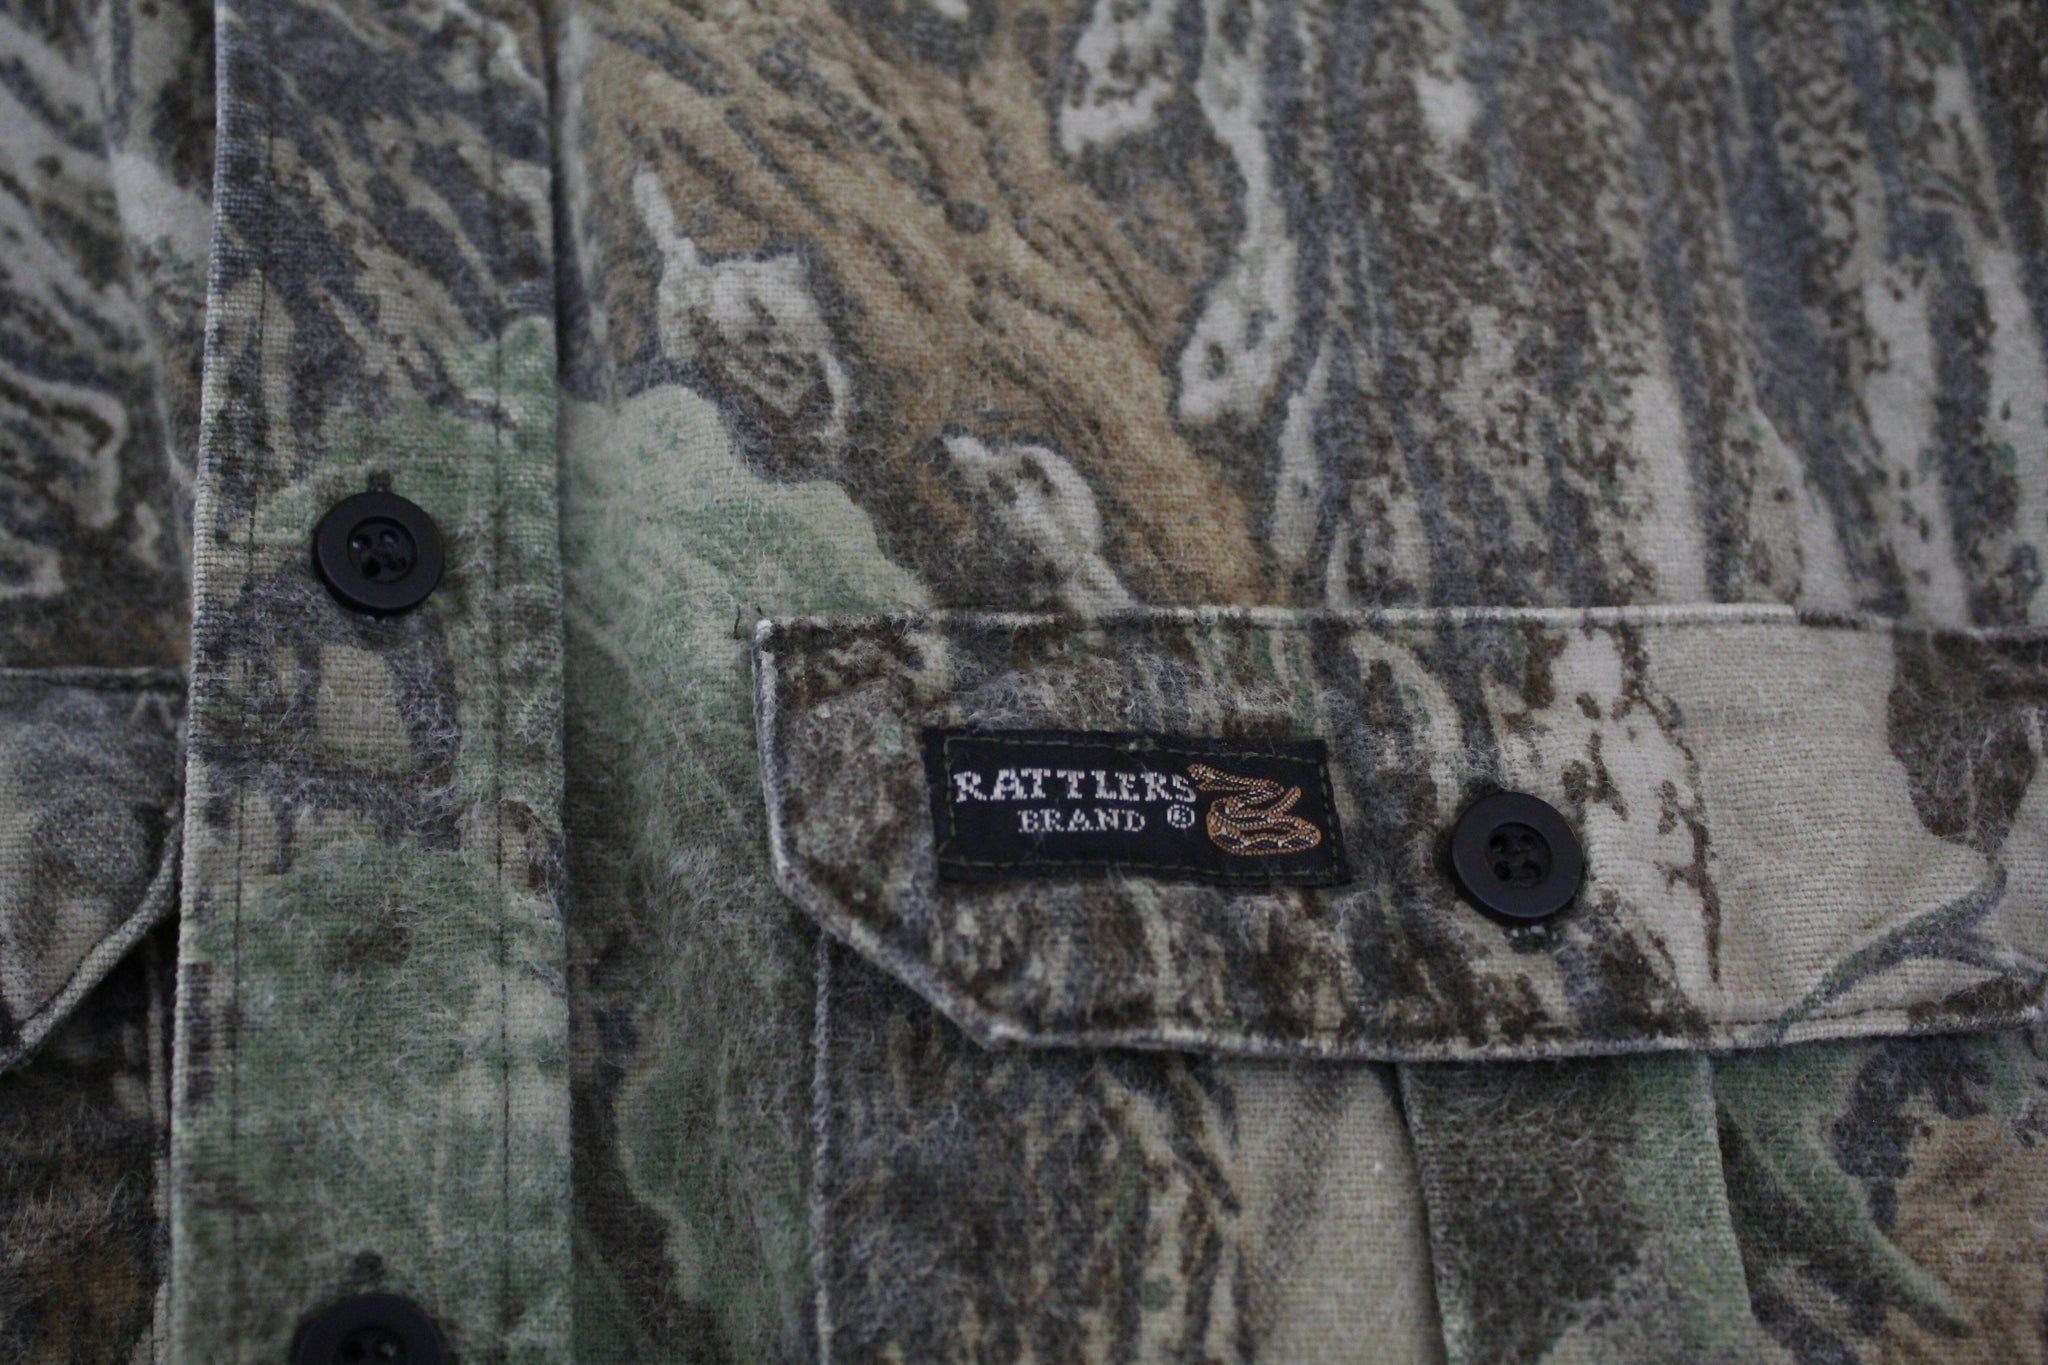 VTG Rattlers Brand Shirt Men's Camo Cotton Hunting Realtree